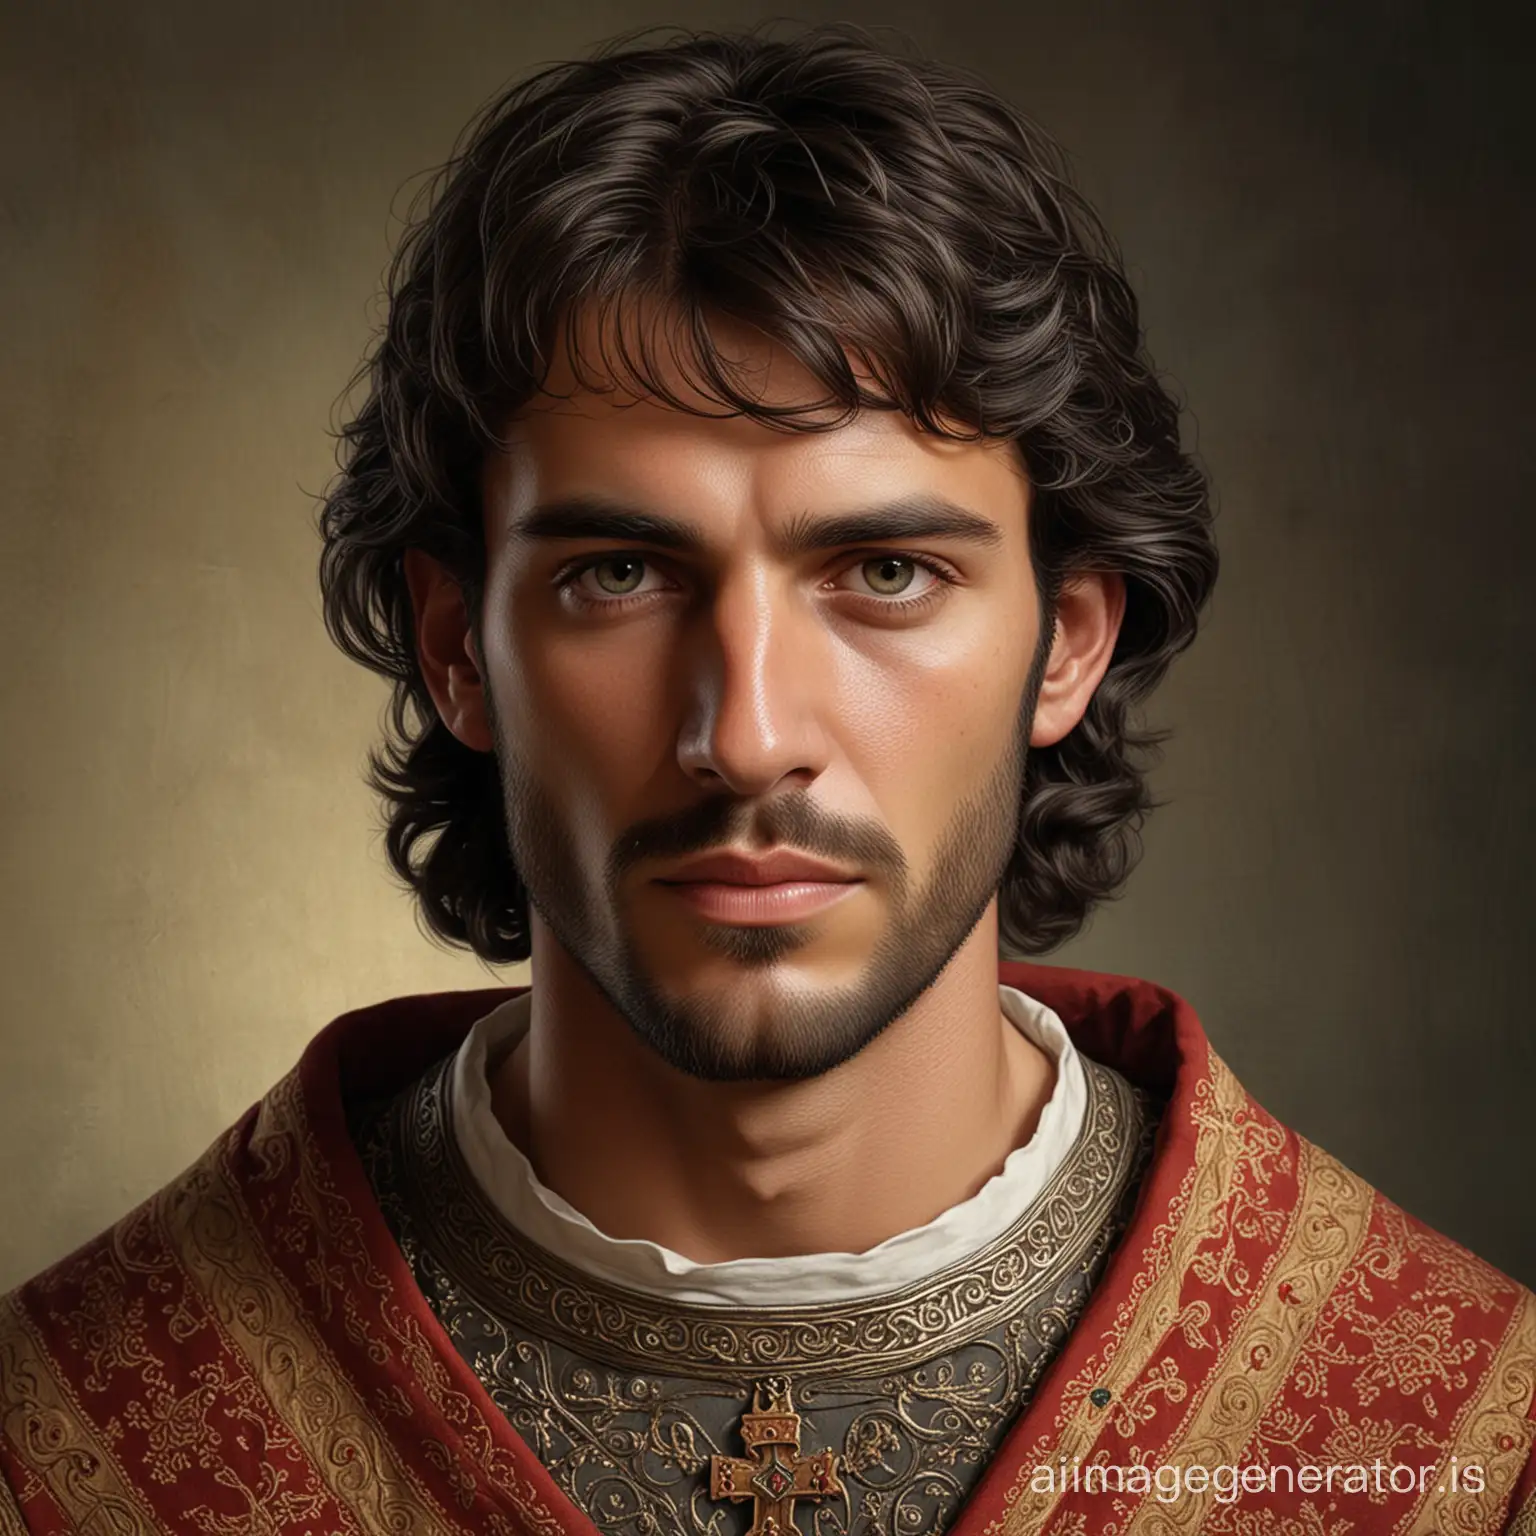 Exquisite-Portrait-of-a-11th-Century-Spanish-Nobleman-in-Christian-Attire